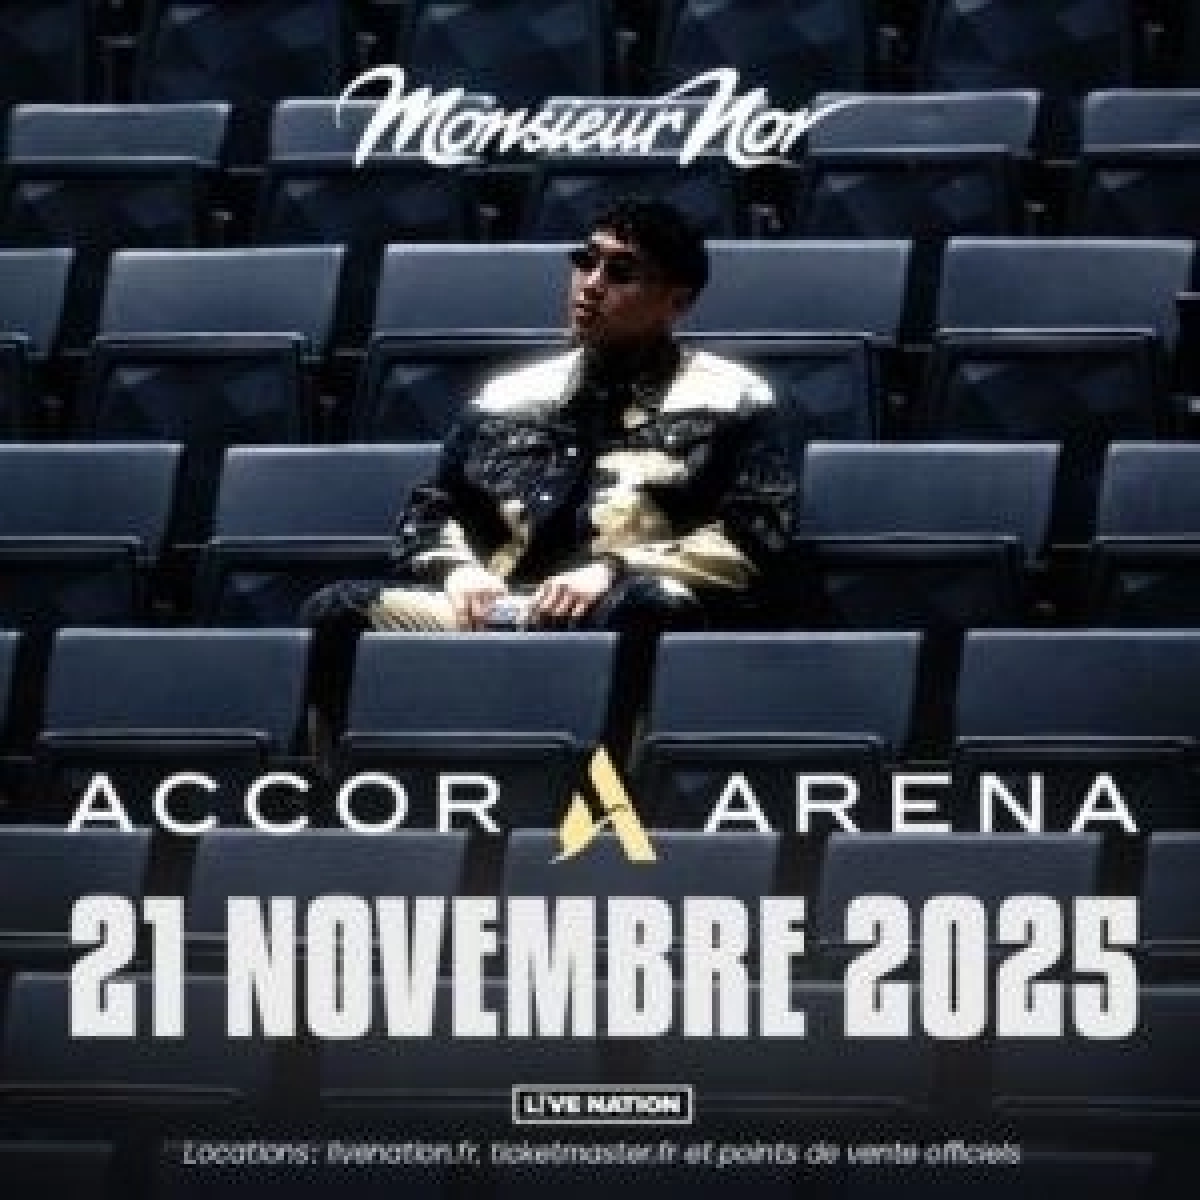 Monsieur Nov at Accor Arena Tickets